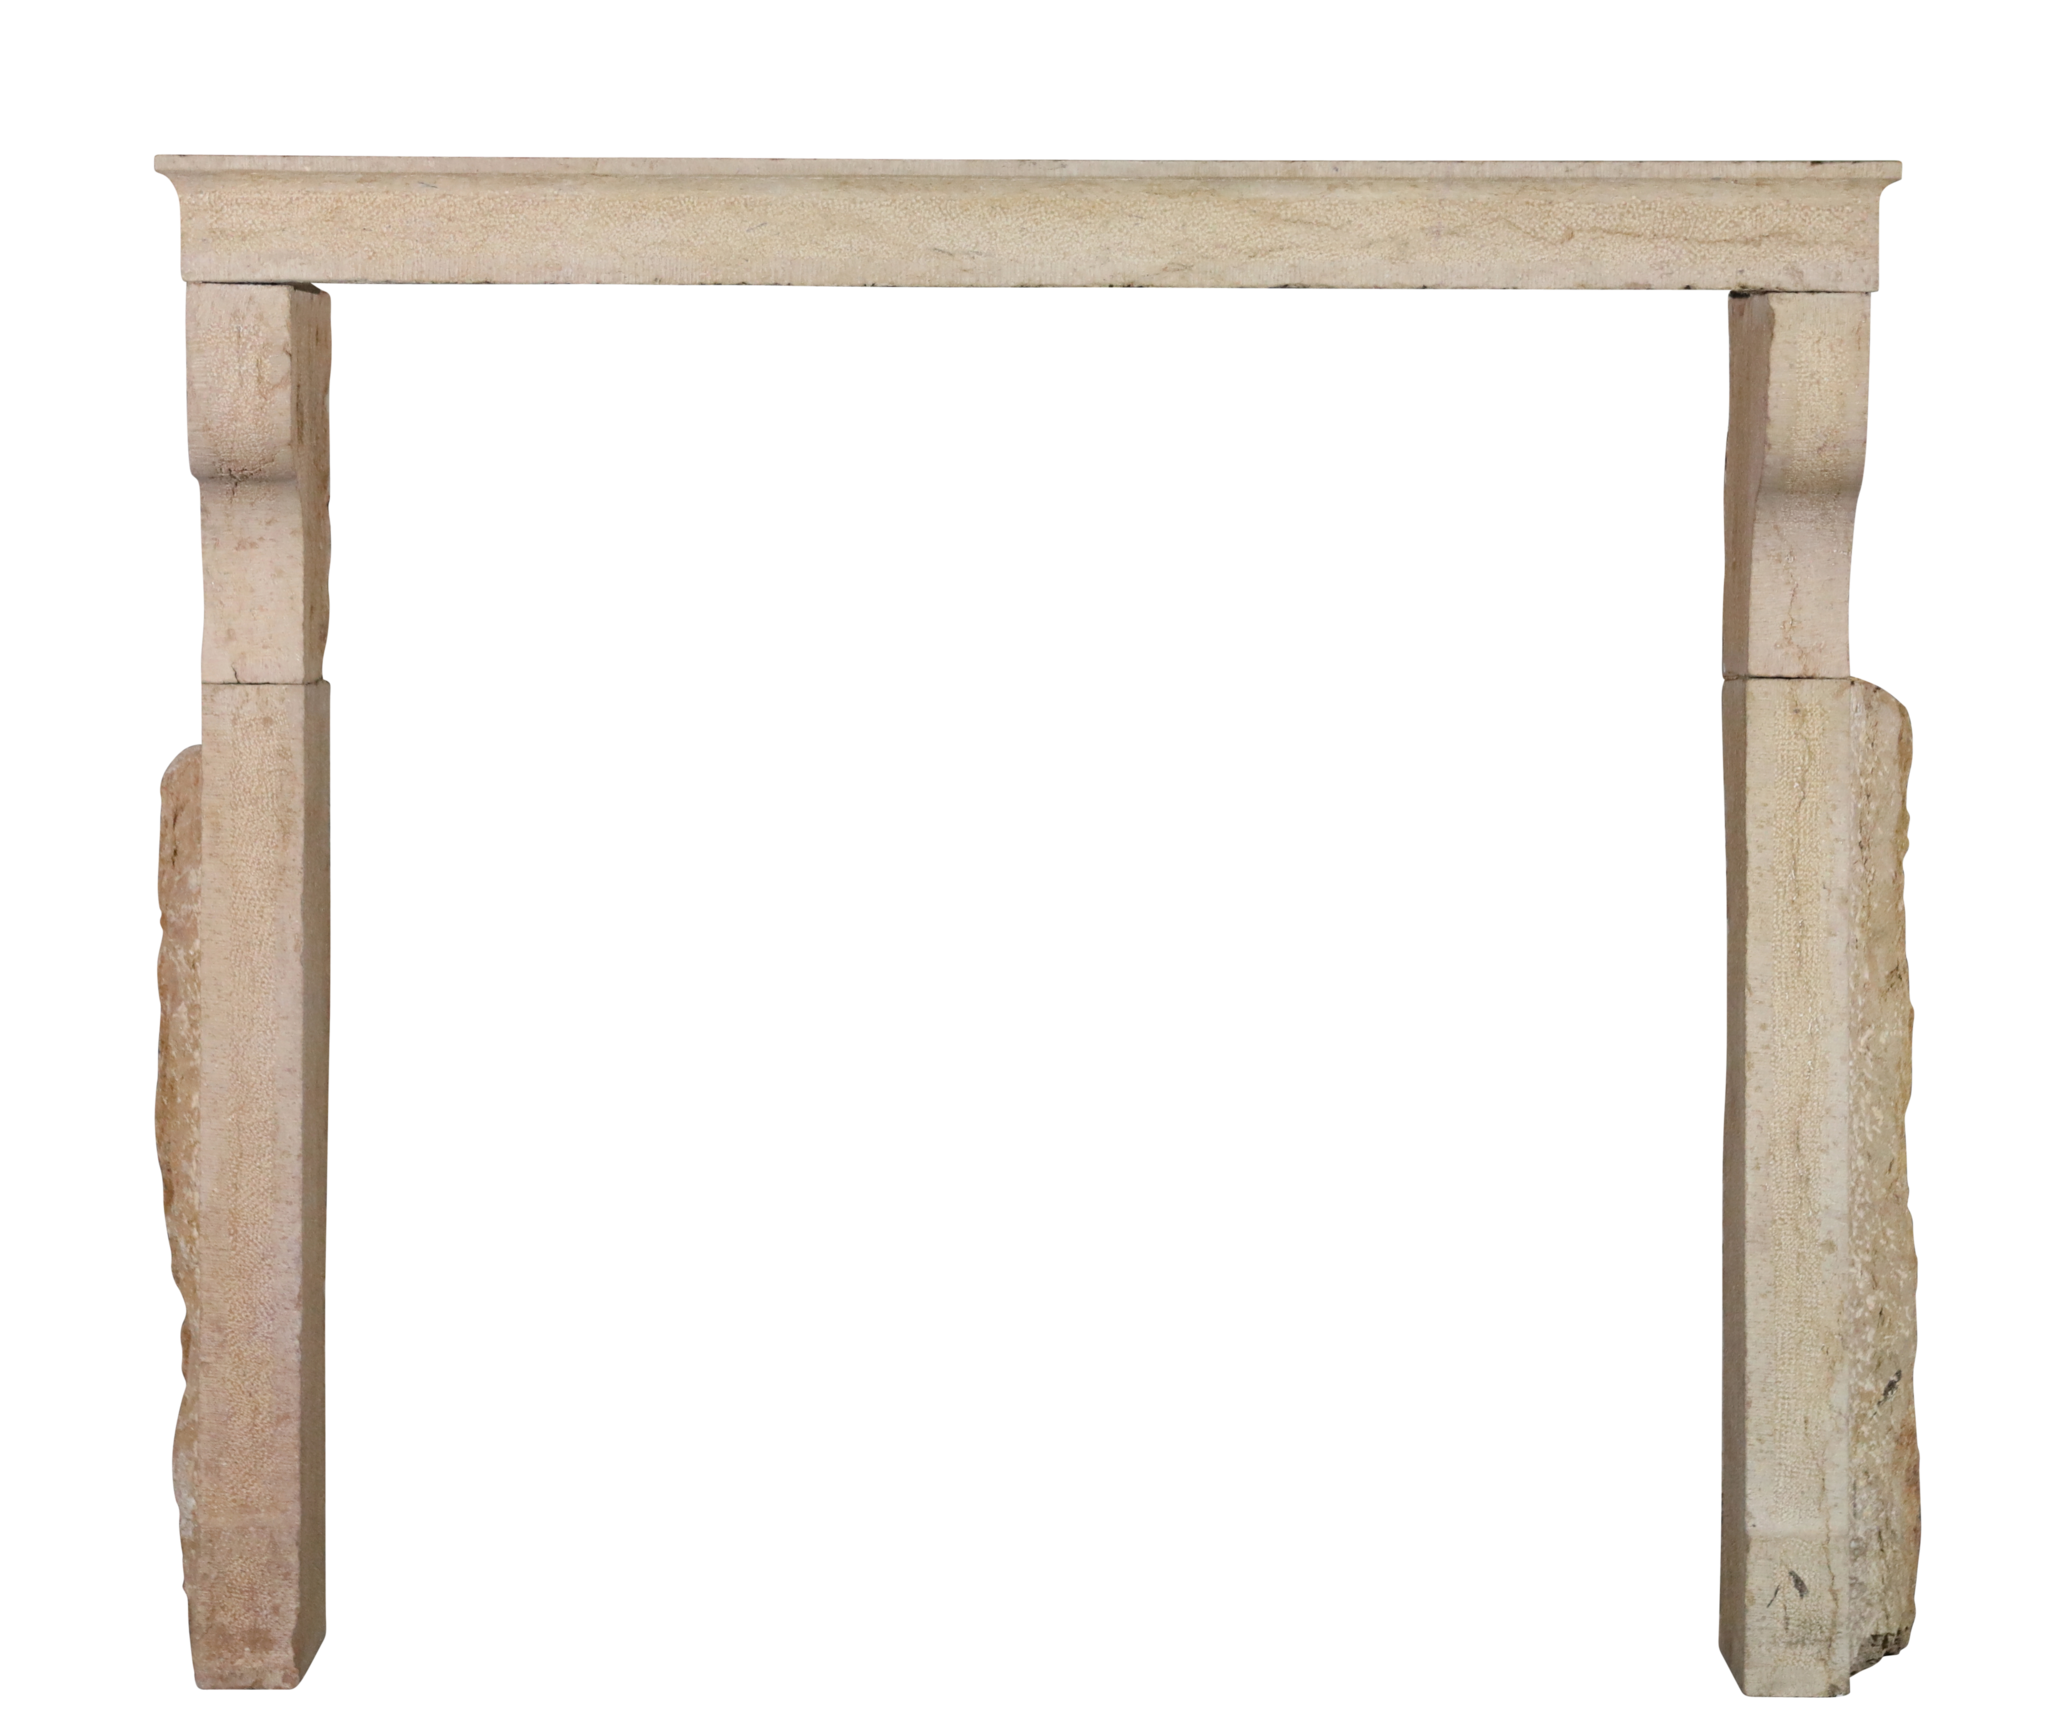 Chimenea decorativa rústica provenzal - The Antique Fireplace Bank